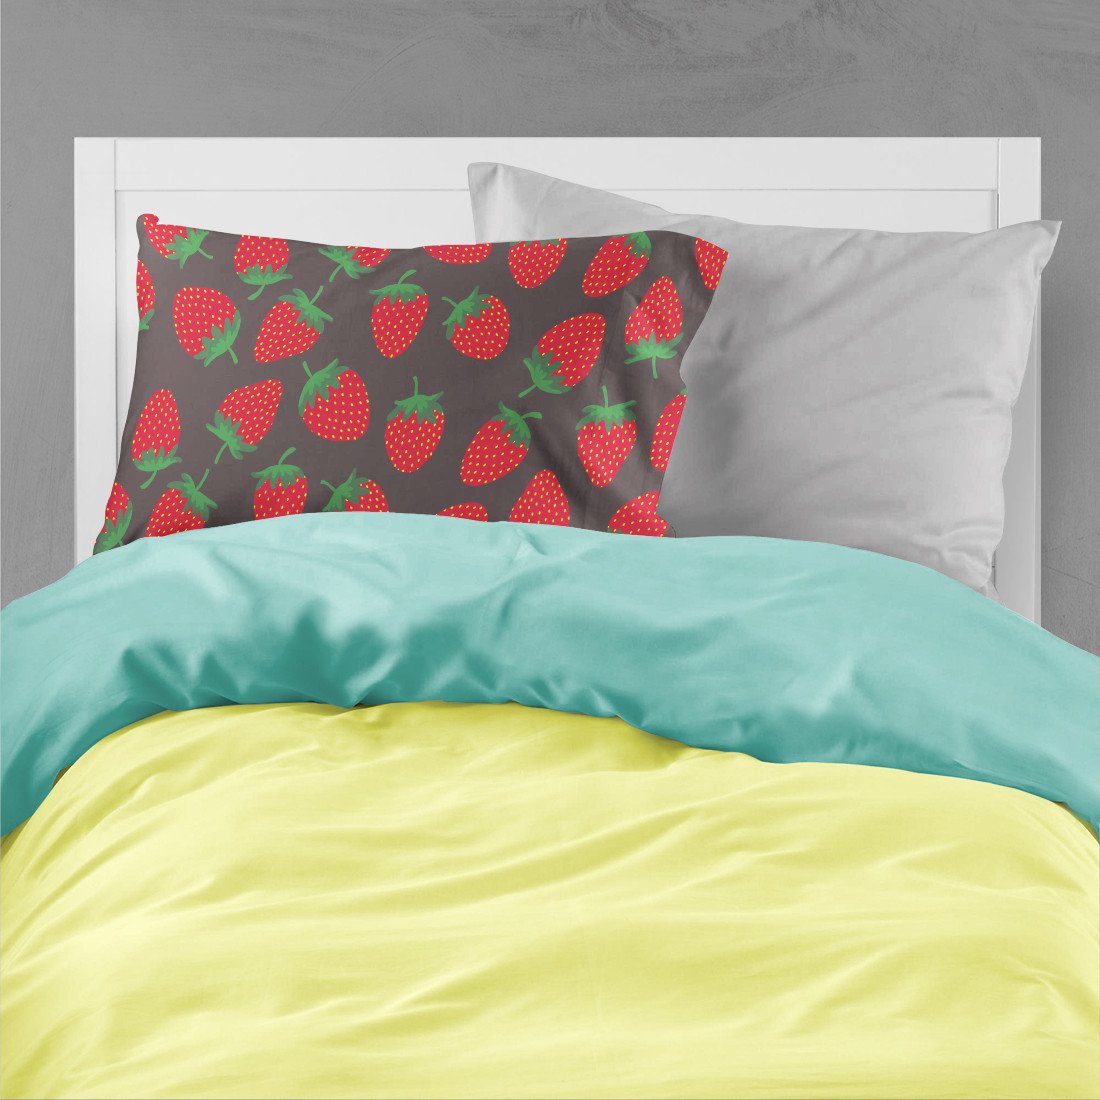 Strawberries on Gray Fabric Standard Pillowcase BB5137PILLOWCASE by Caroline's Treasures